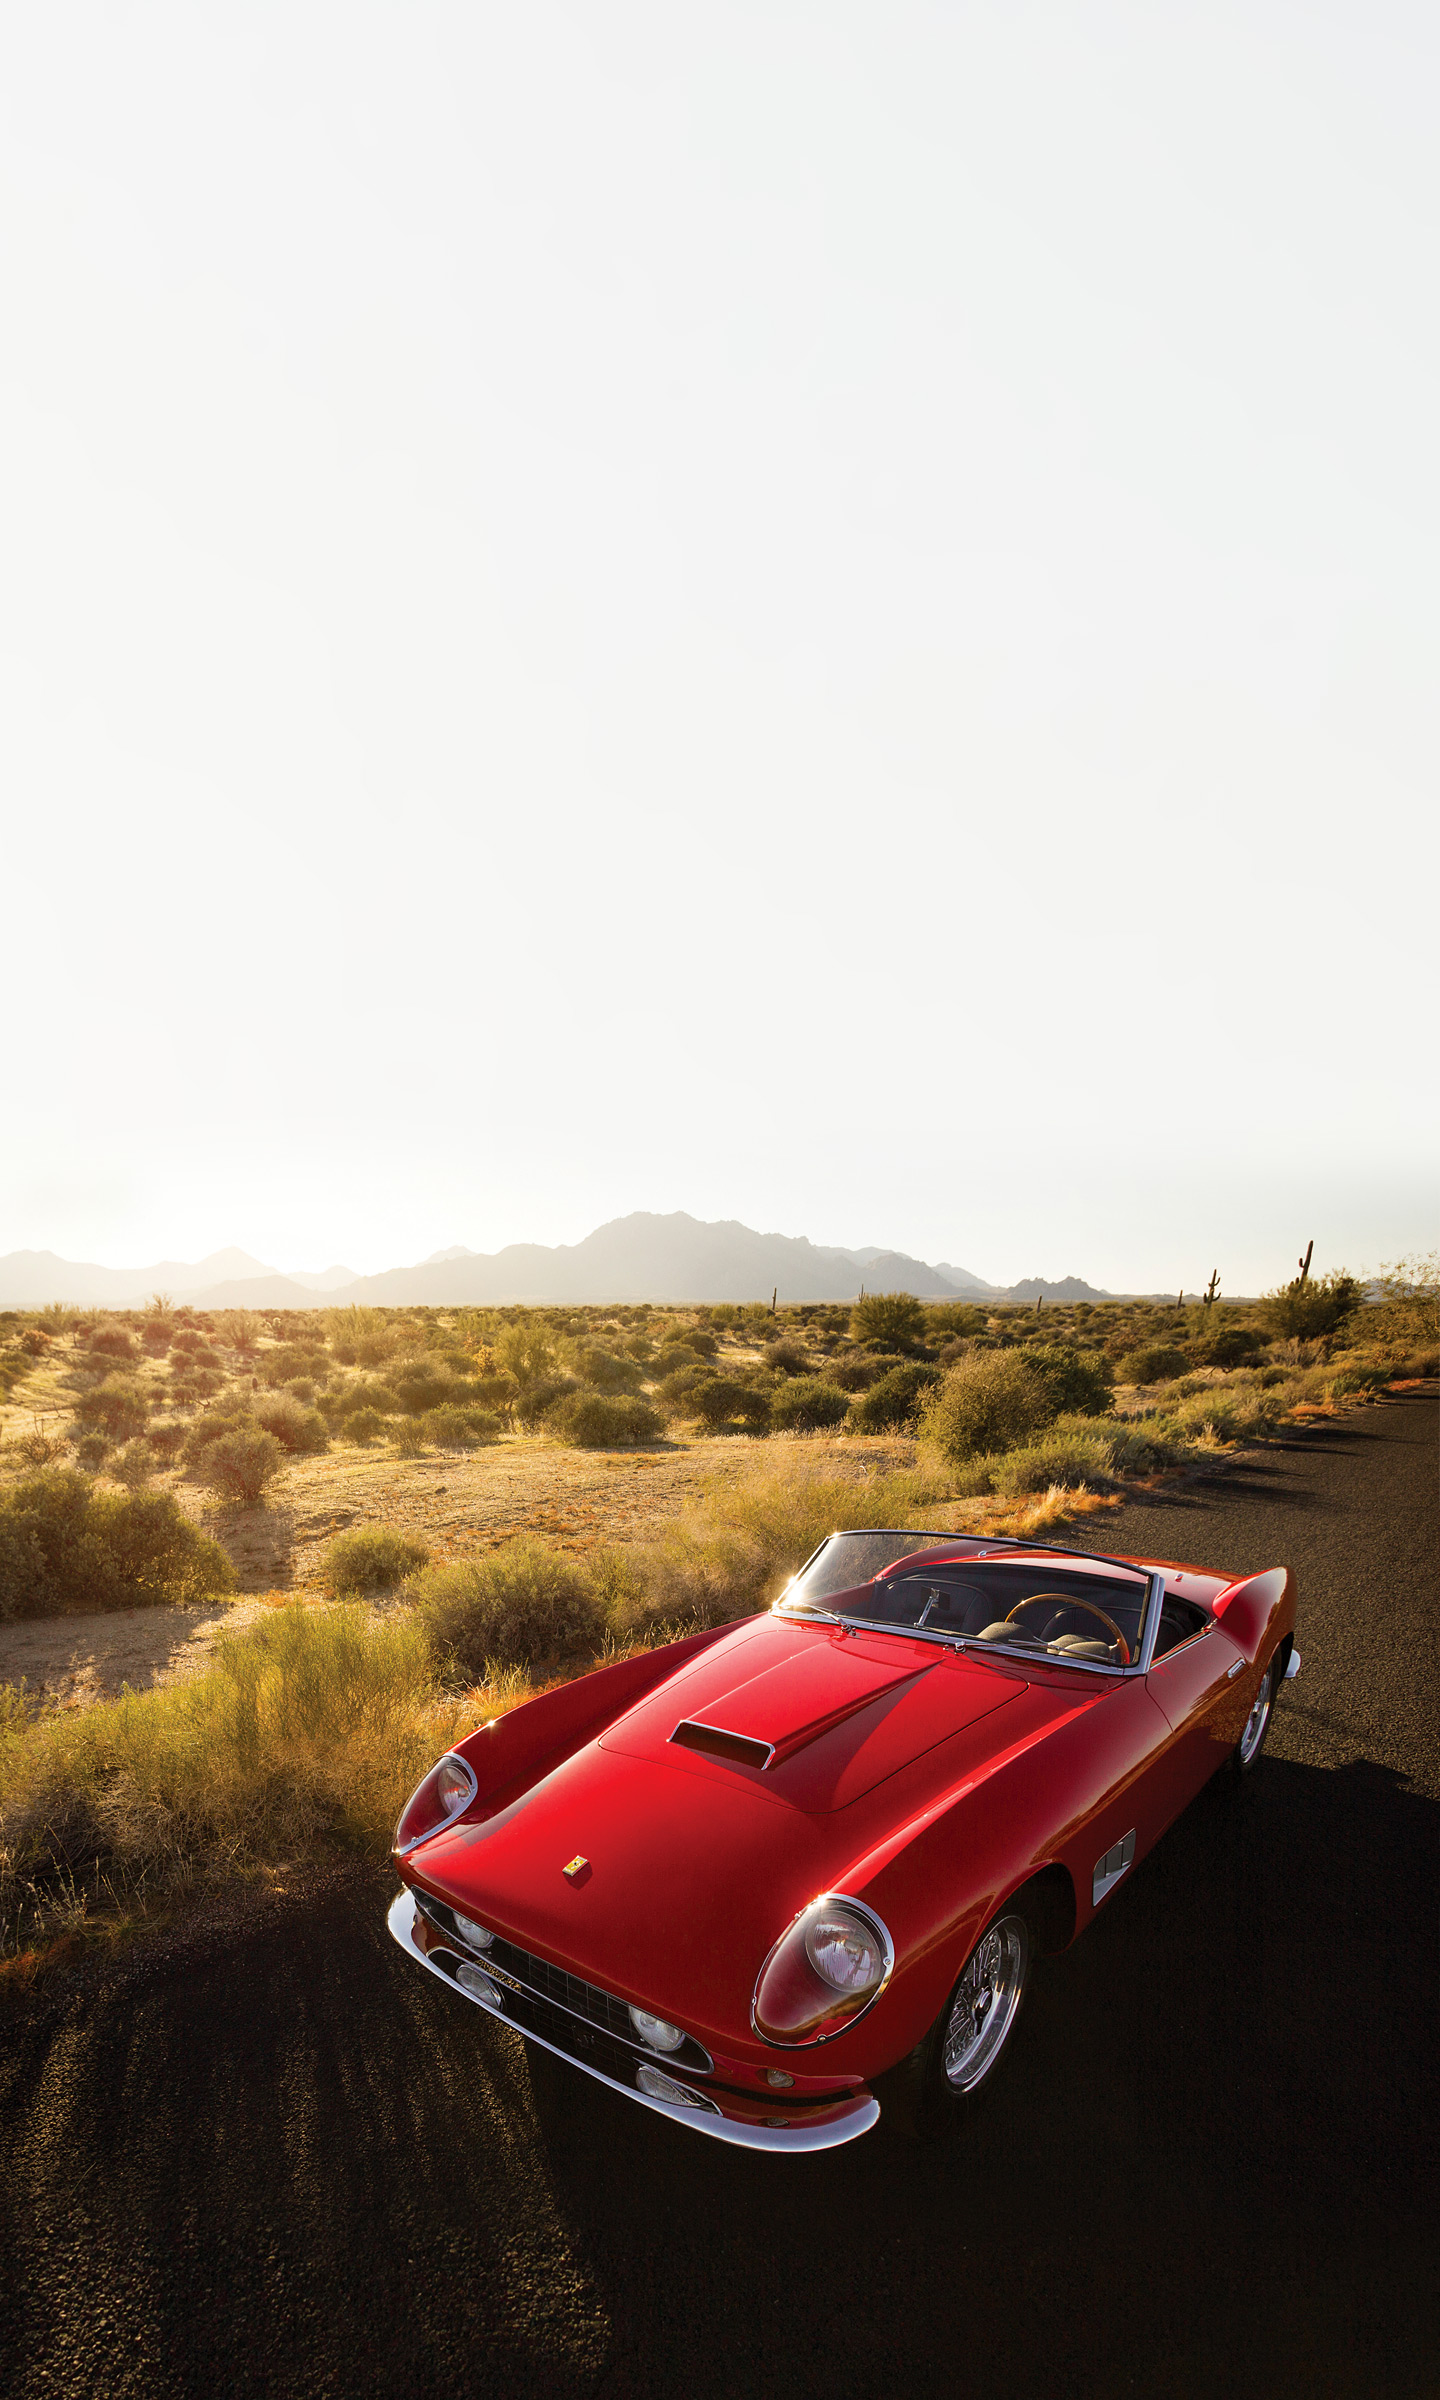  1963 Ferrari 250 GT California Spyder Wallpaper.